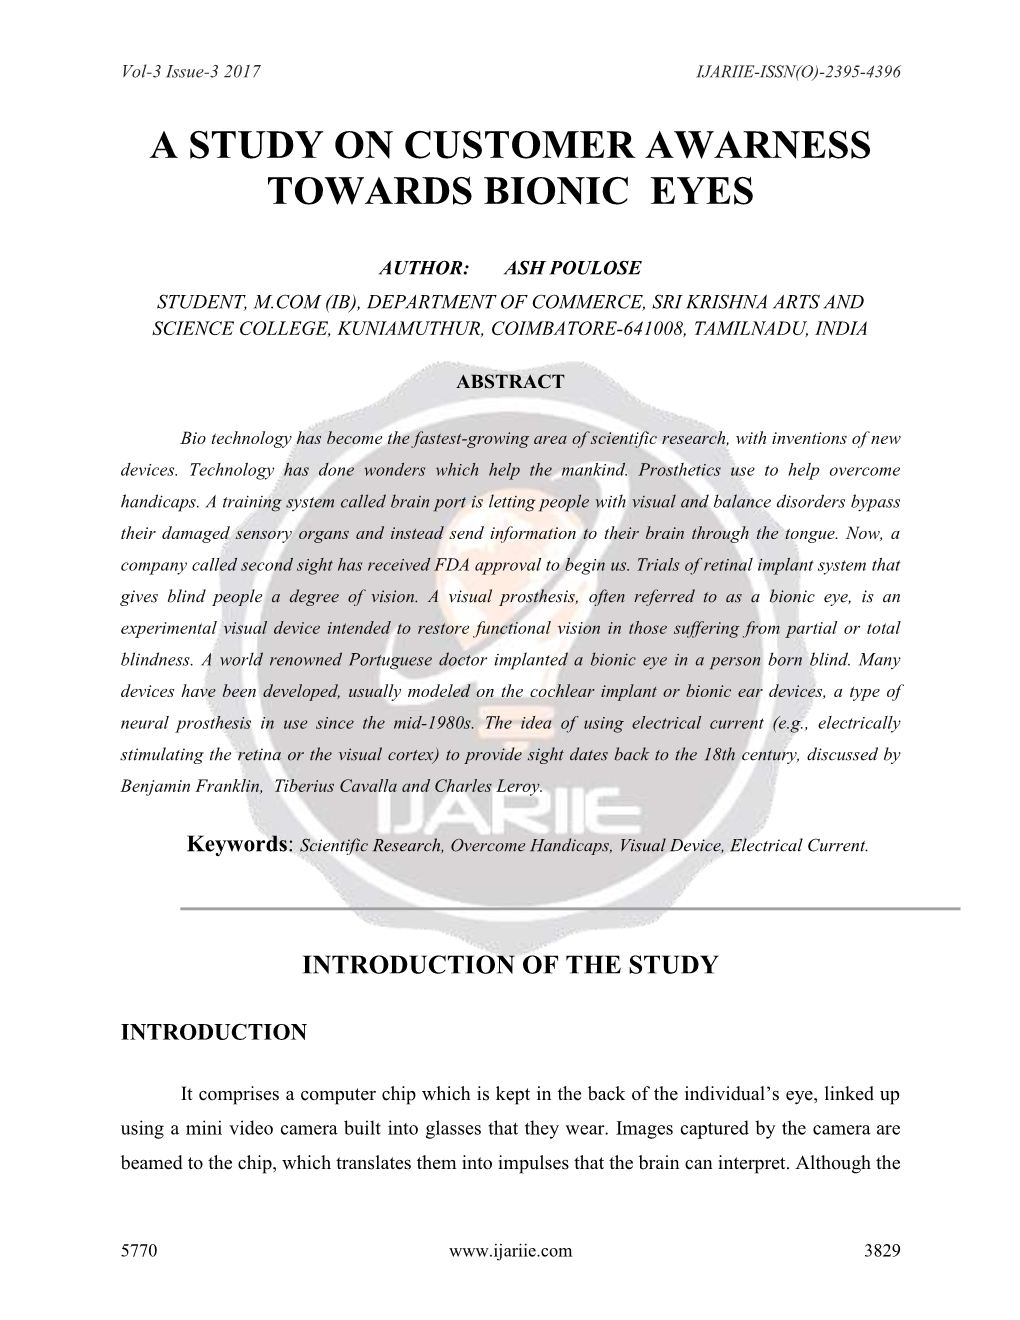 A Study on Customer Awarness Towards Bionic Eyes